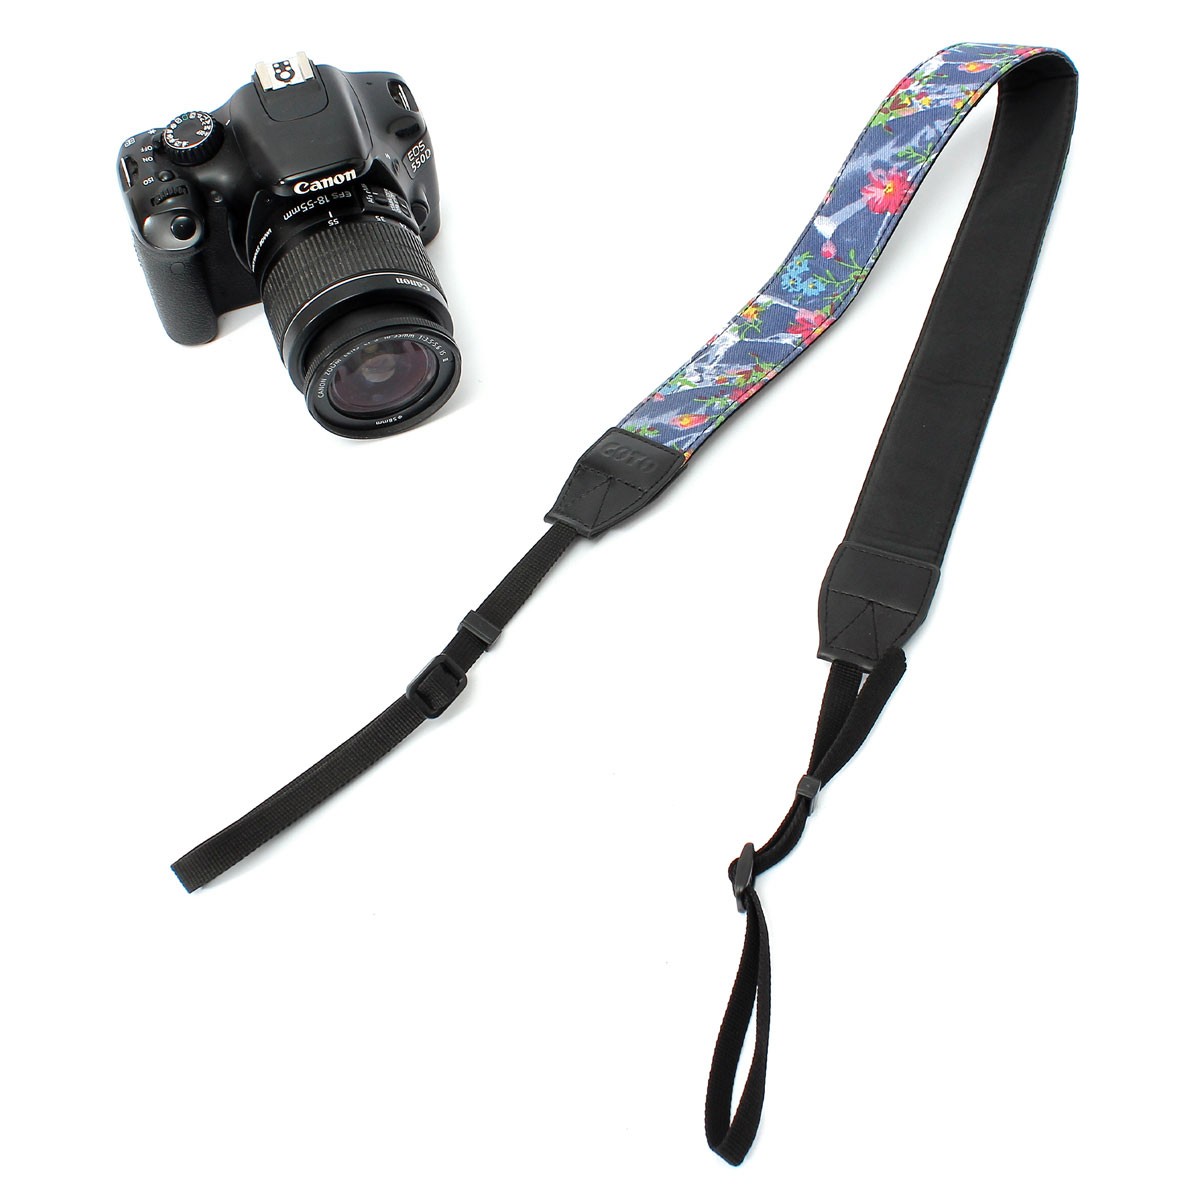 

Universal Nylon PU Flower Camera Shoulder Neck Belt Strap For SLR DSLR Nikon Canon Sony